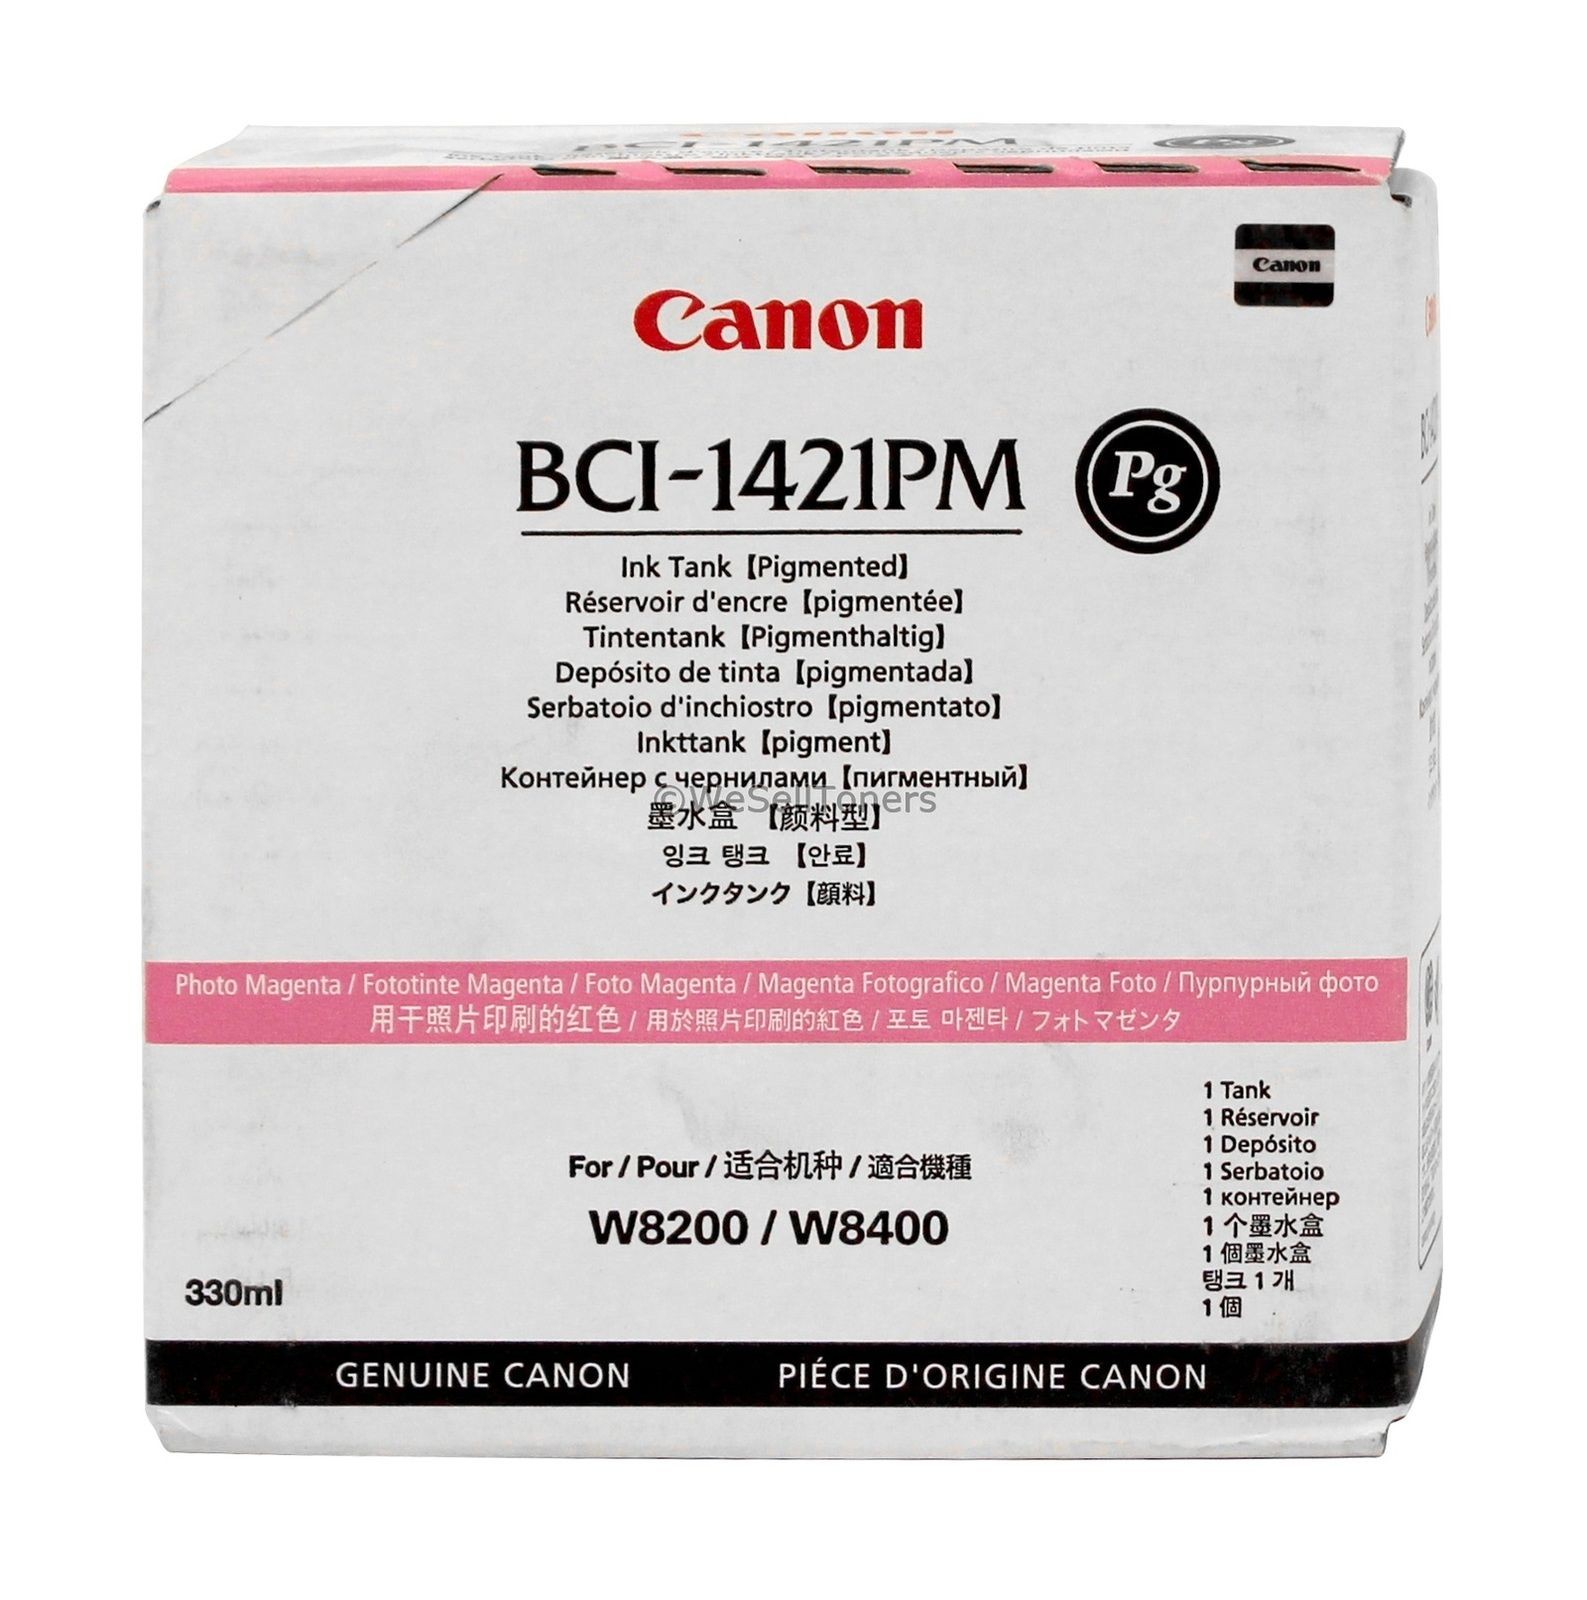 ~Brand New Original CANON BCI-1421PM INK / INKJET Cartridge Photo Magenta